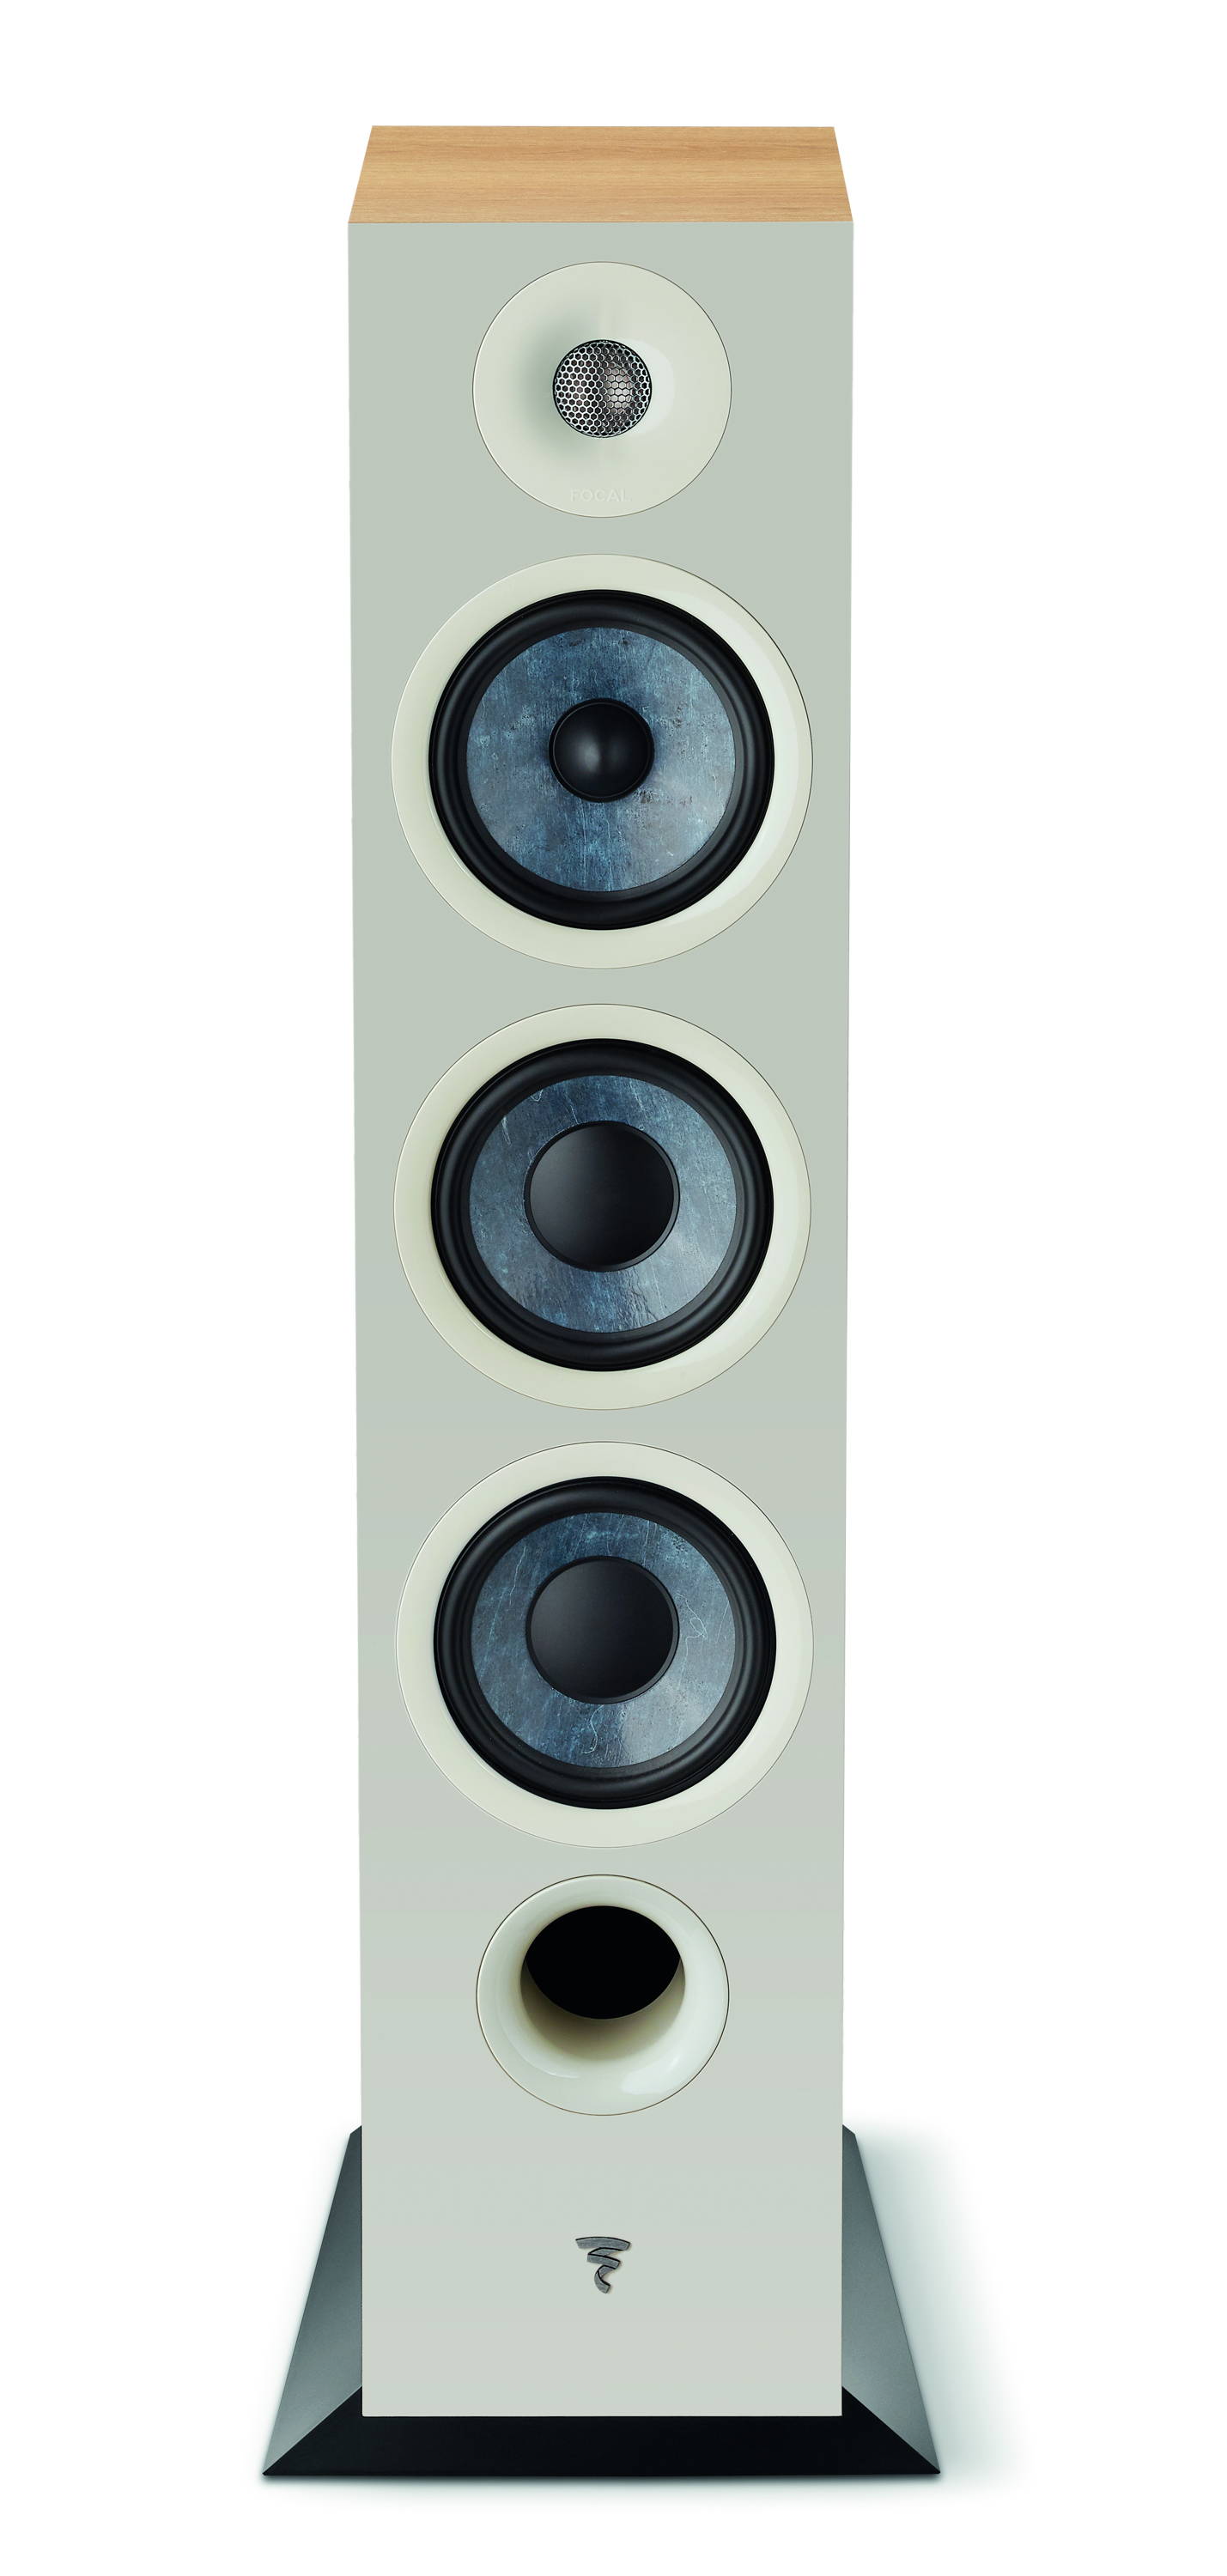 Image of Focal Chora 826 loudspeaker in Lightwood color